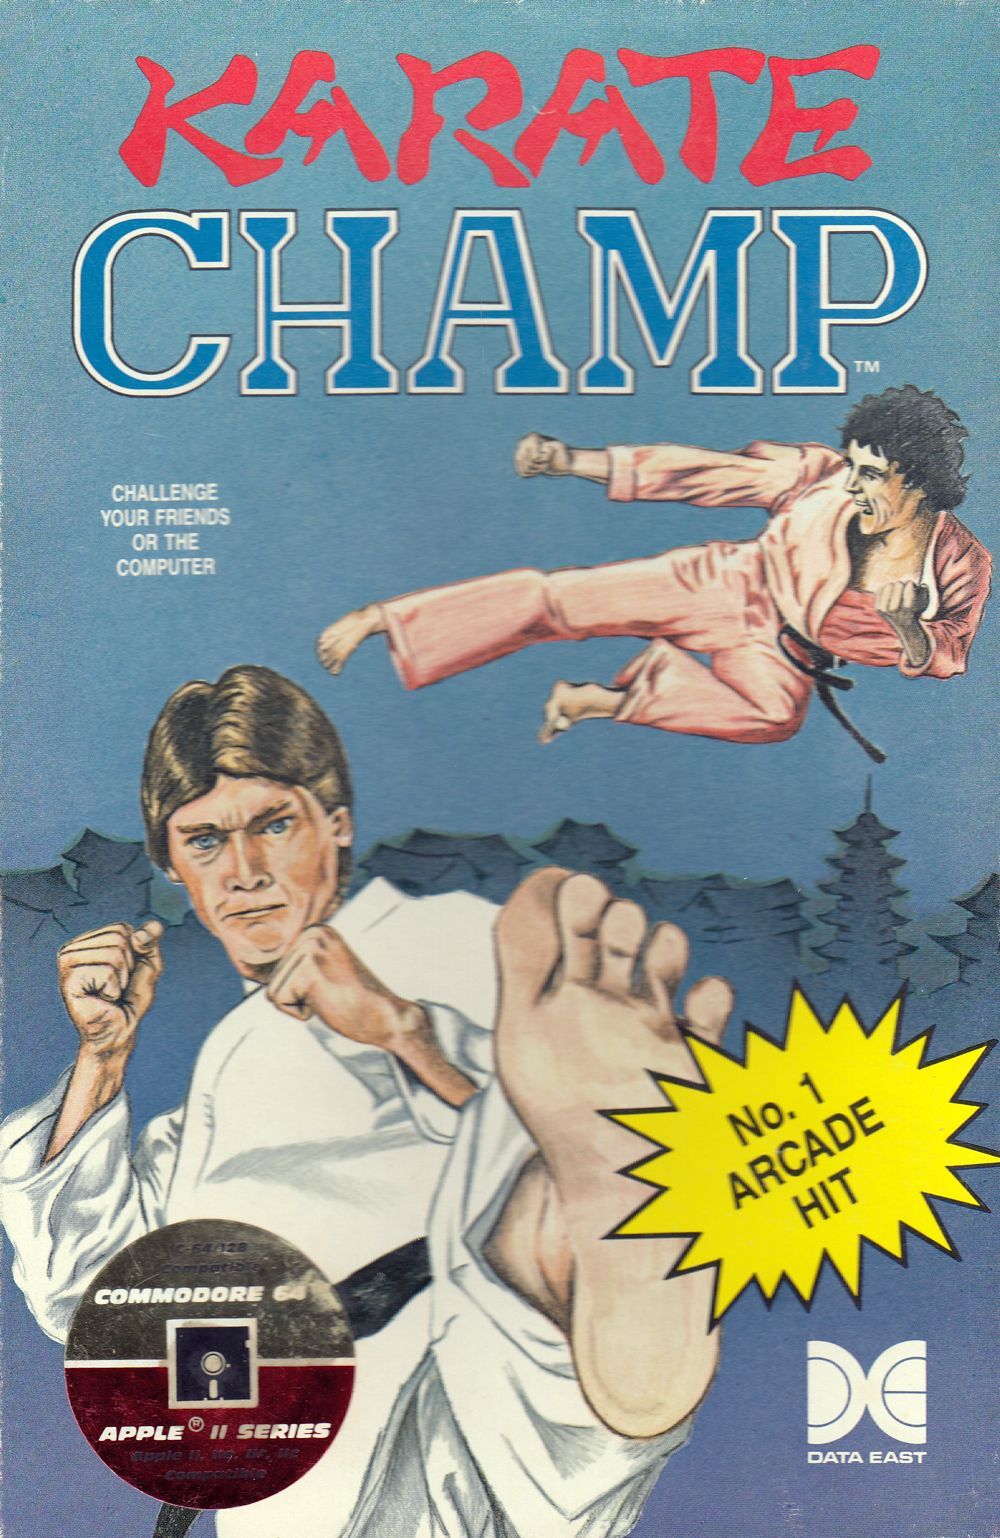 Karate Champ Video Game